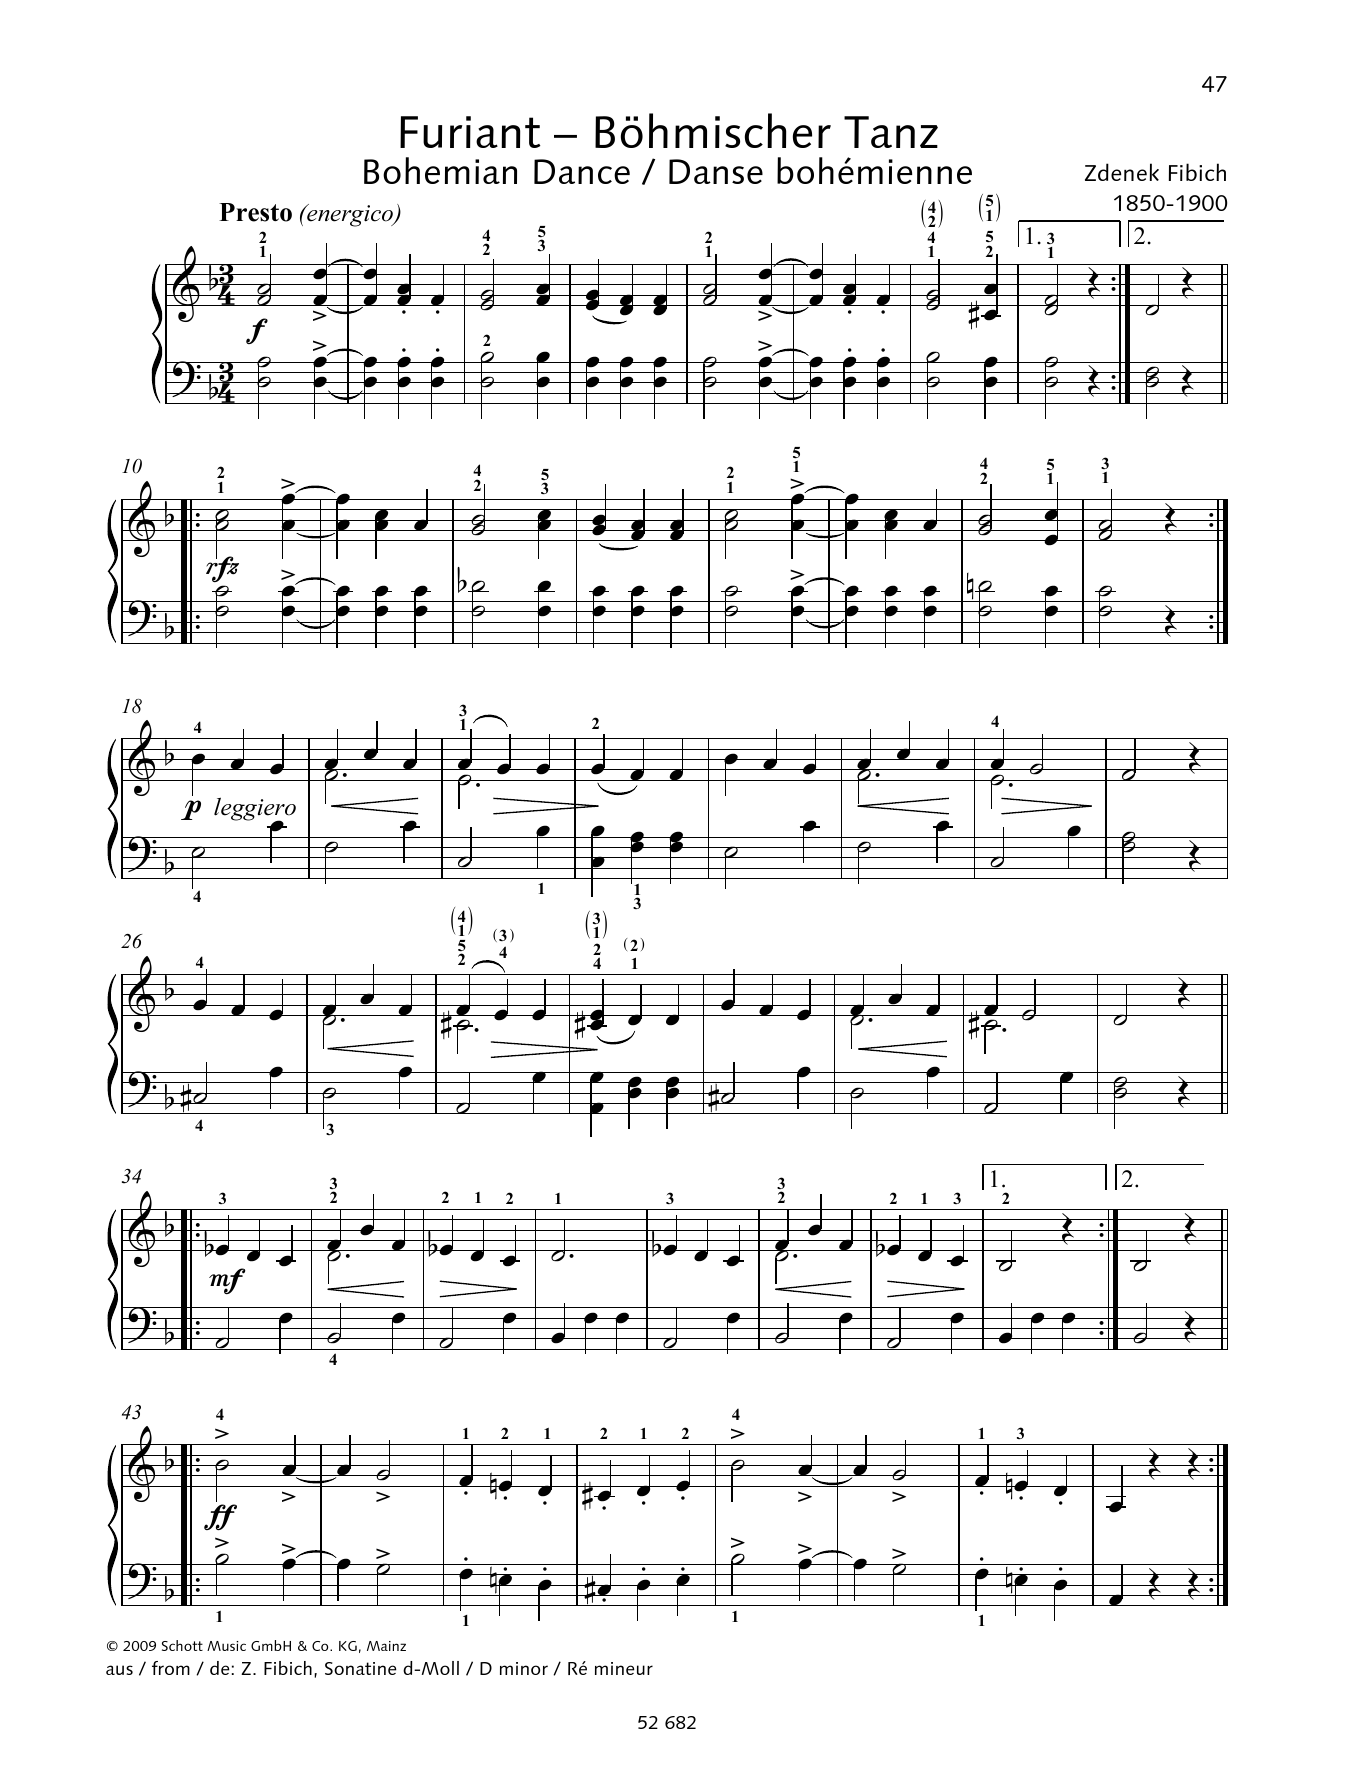 Zdenek Fibich Furiant - Bohemian Dance Sheet Music Notes & Chords for Piano Solo - Download or Print PDF